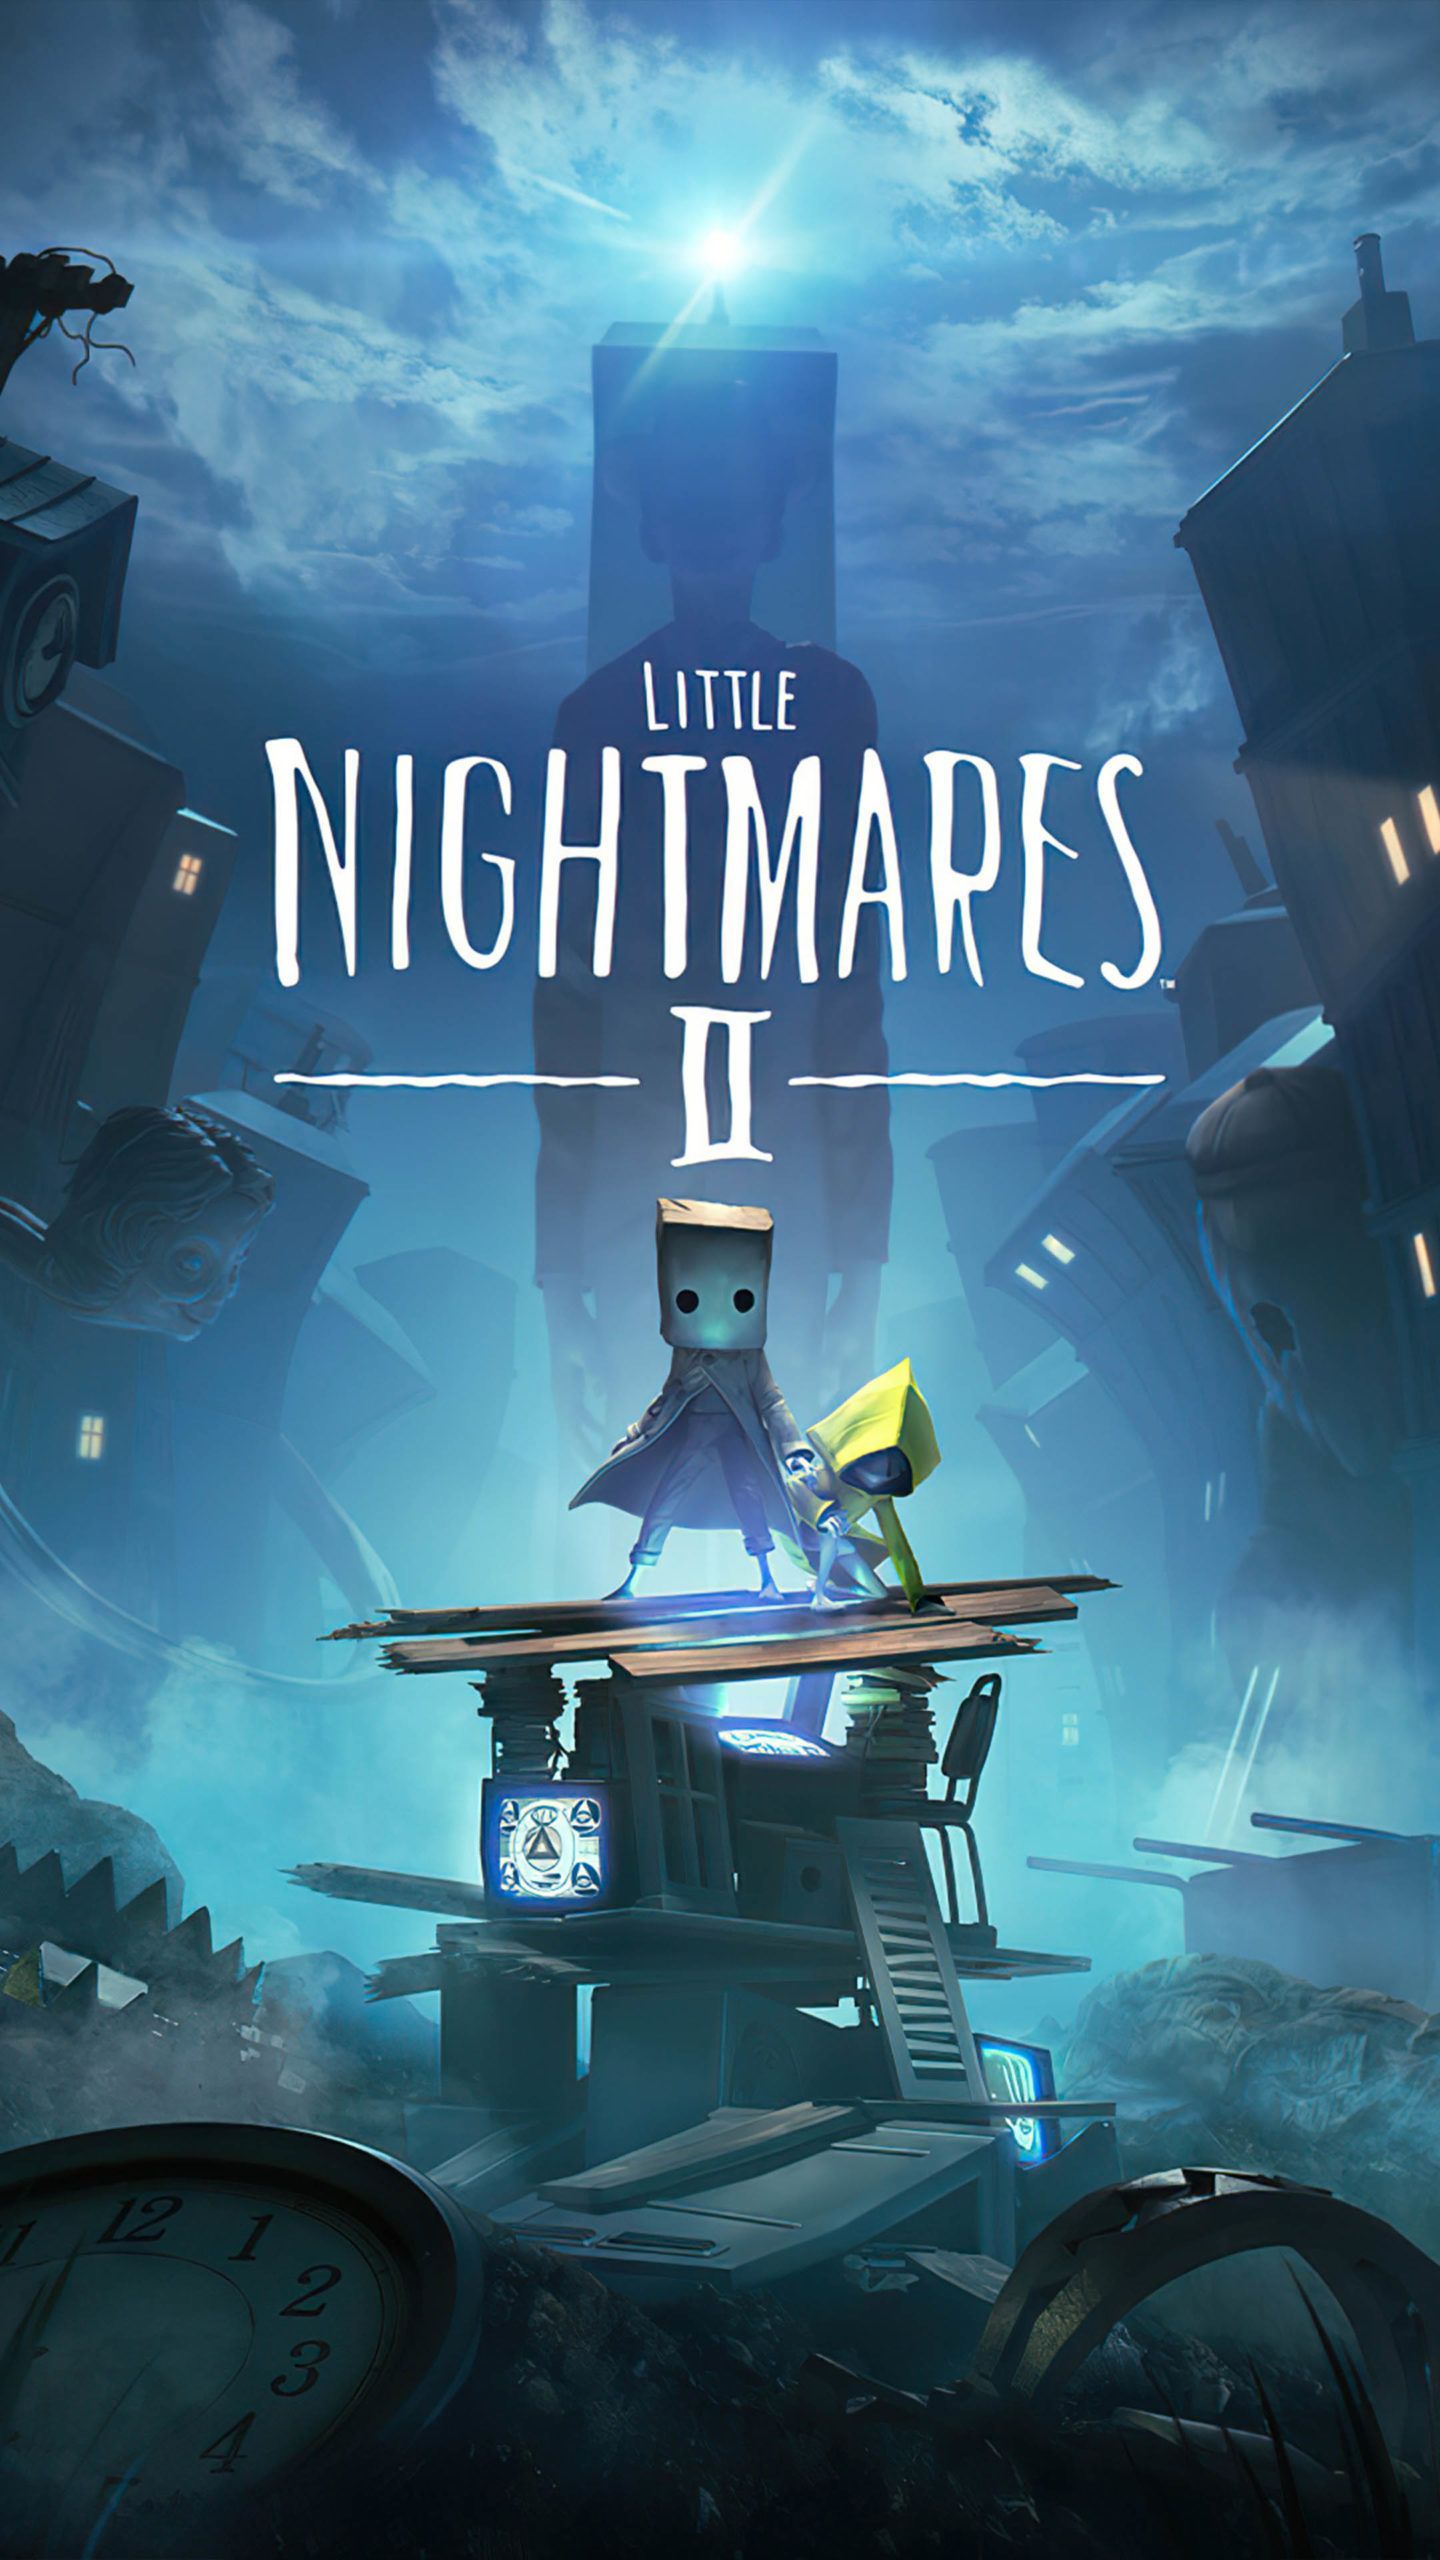 Little Nightmares 2 Game Poster 4K Ultra HD Mobile Wallpaper. Little nightmares fanart, Nightmares art, Nightmare